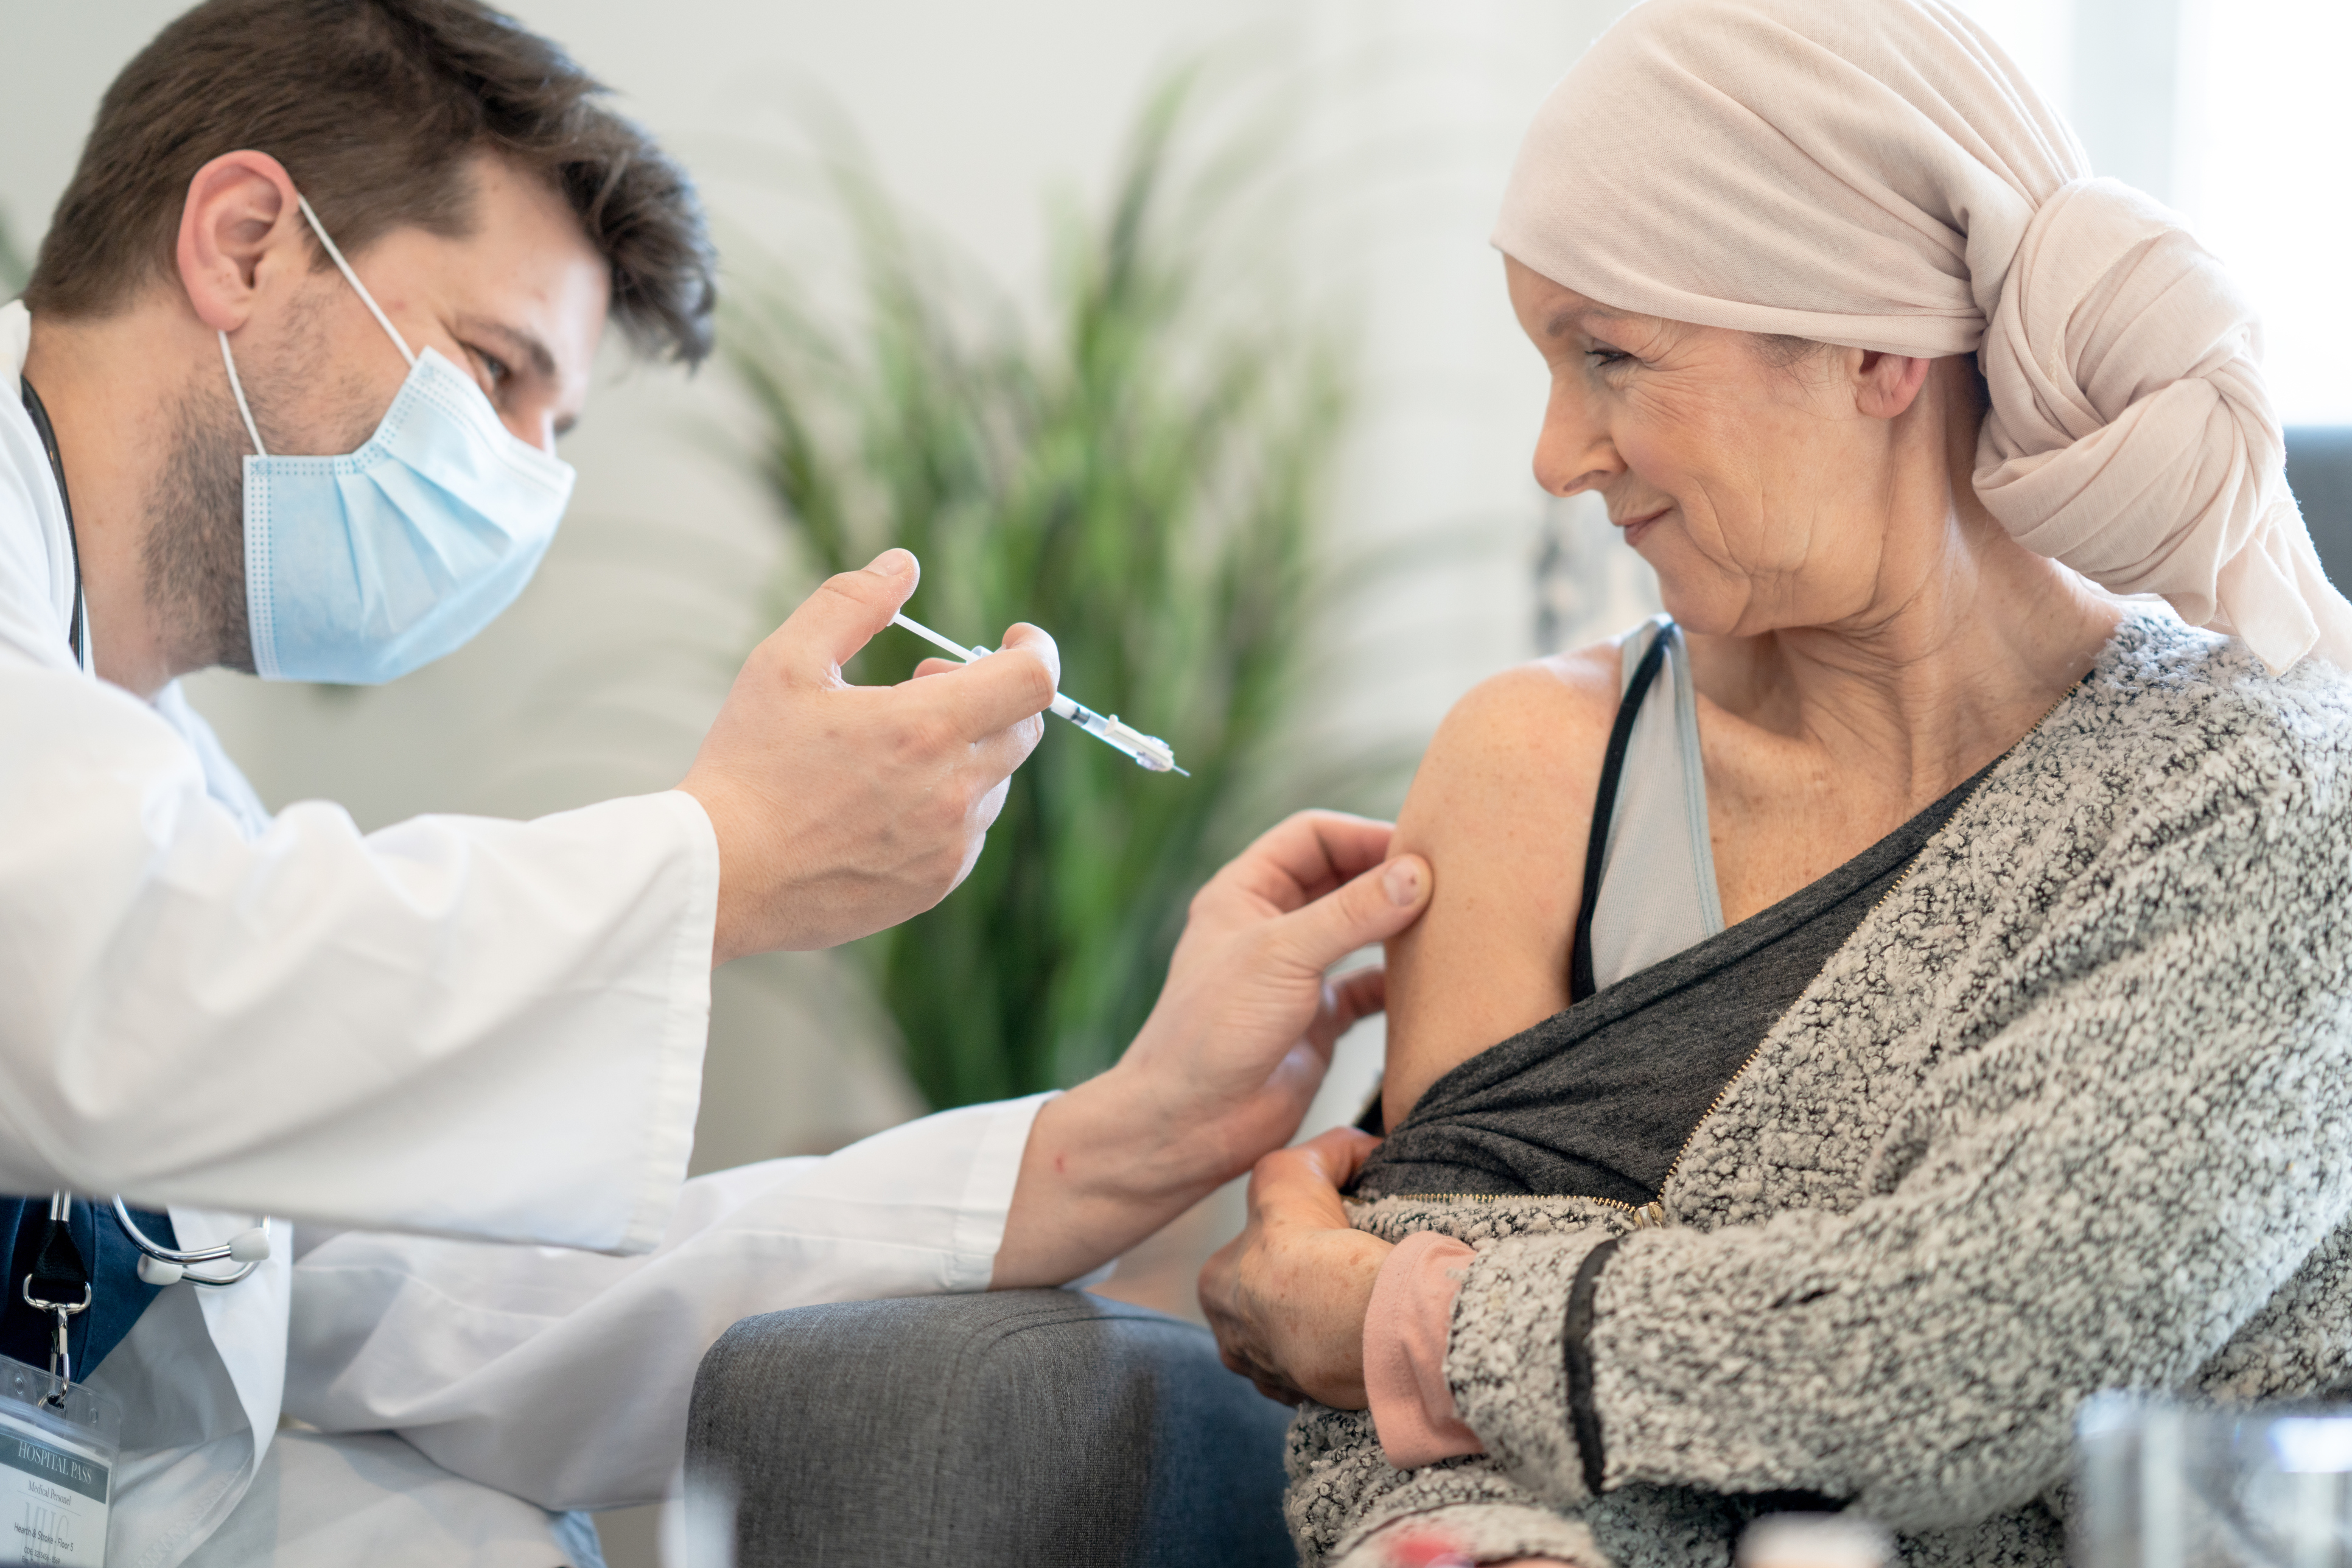 A woman receives a vaccine